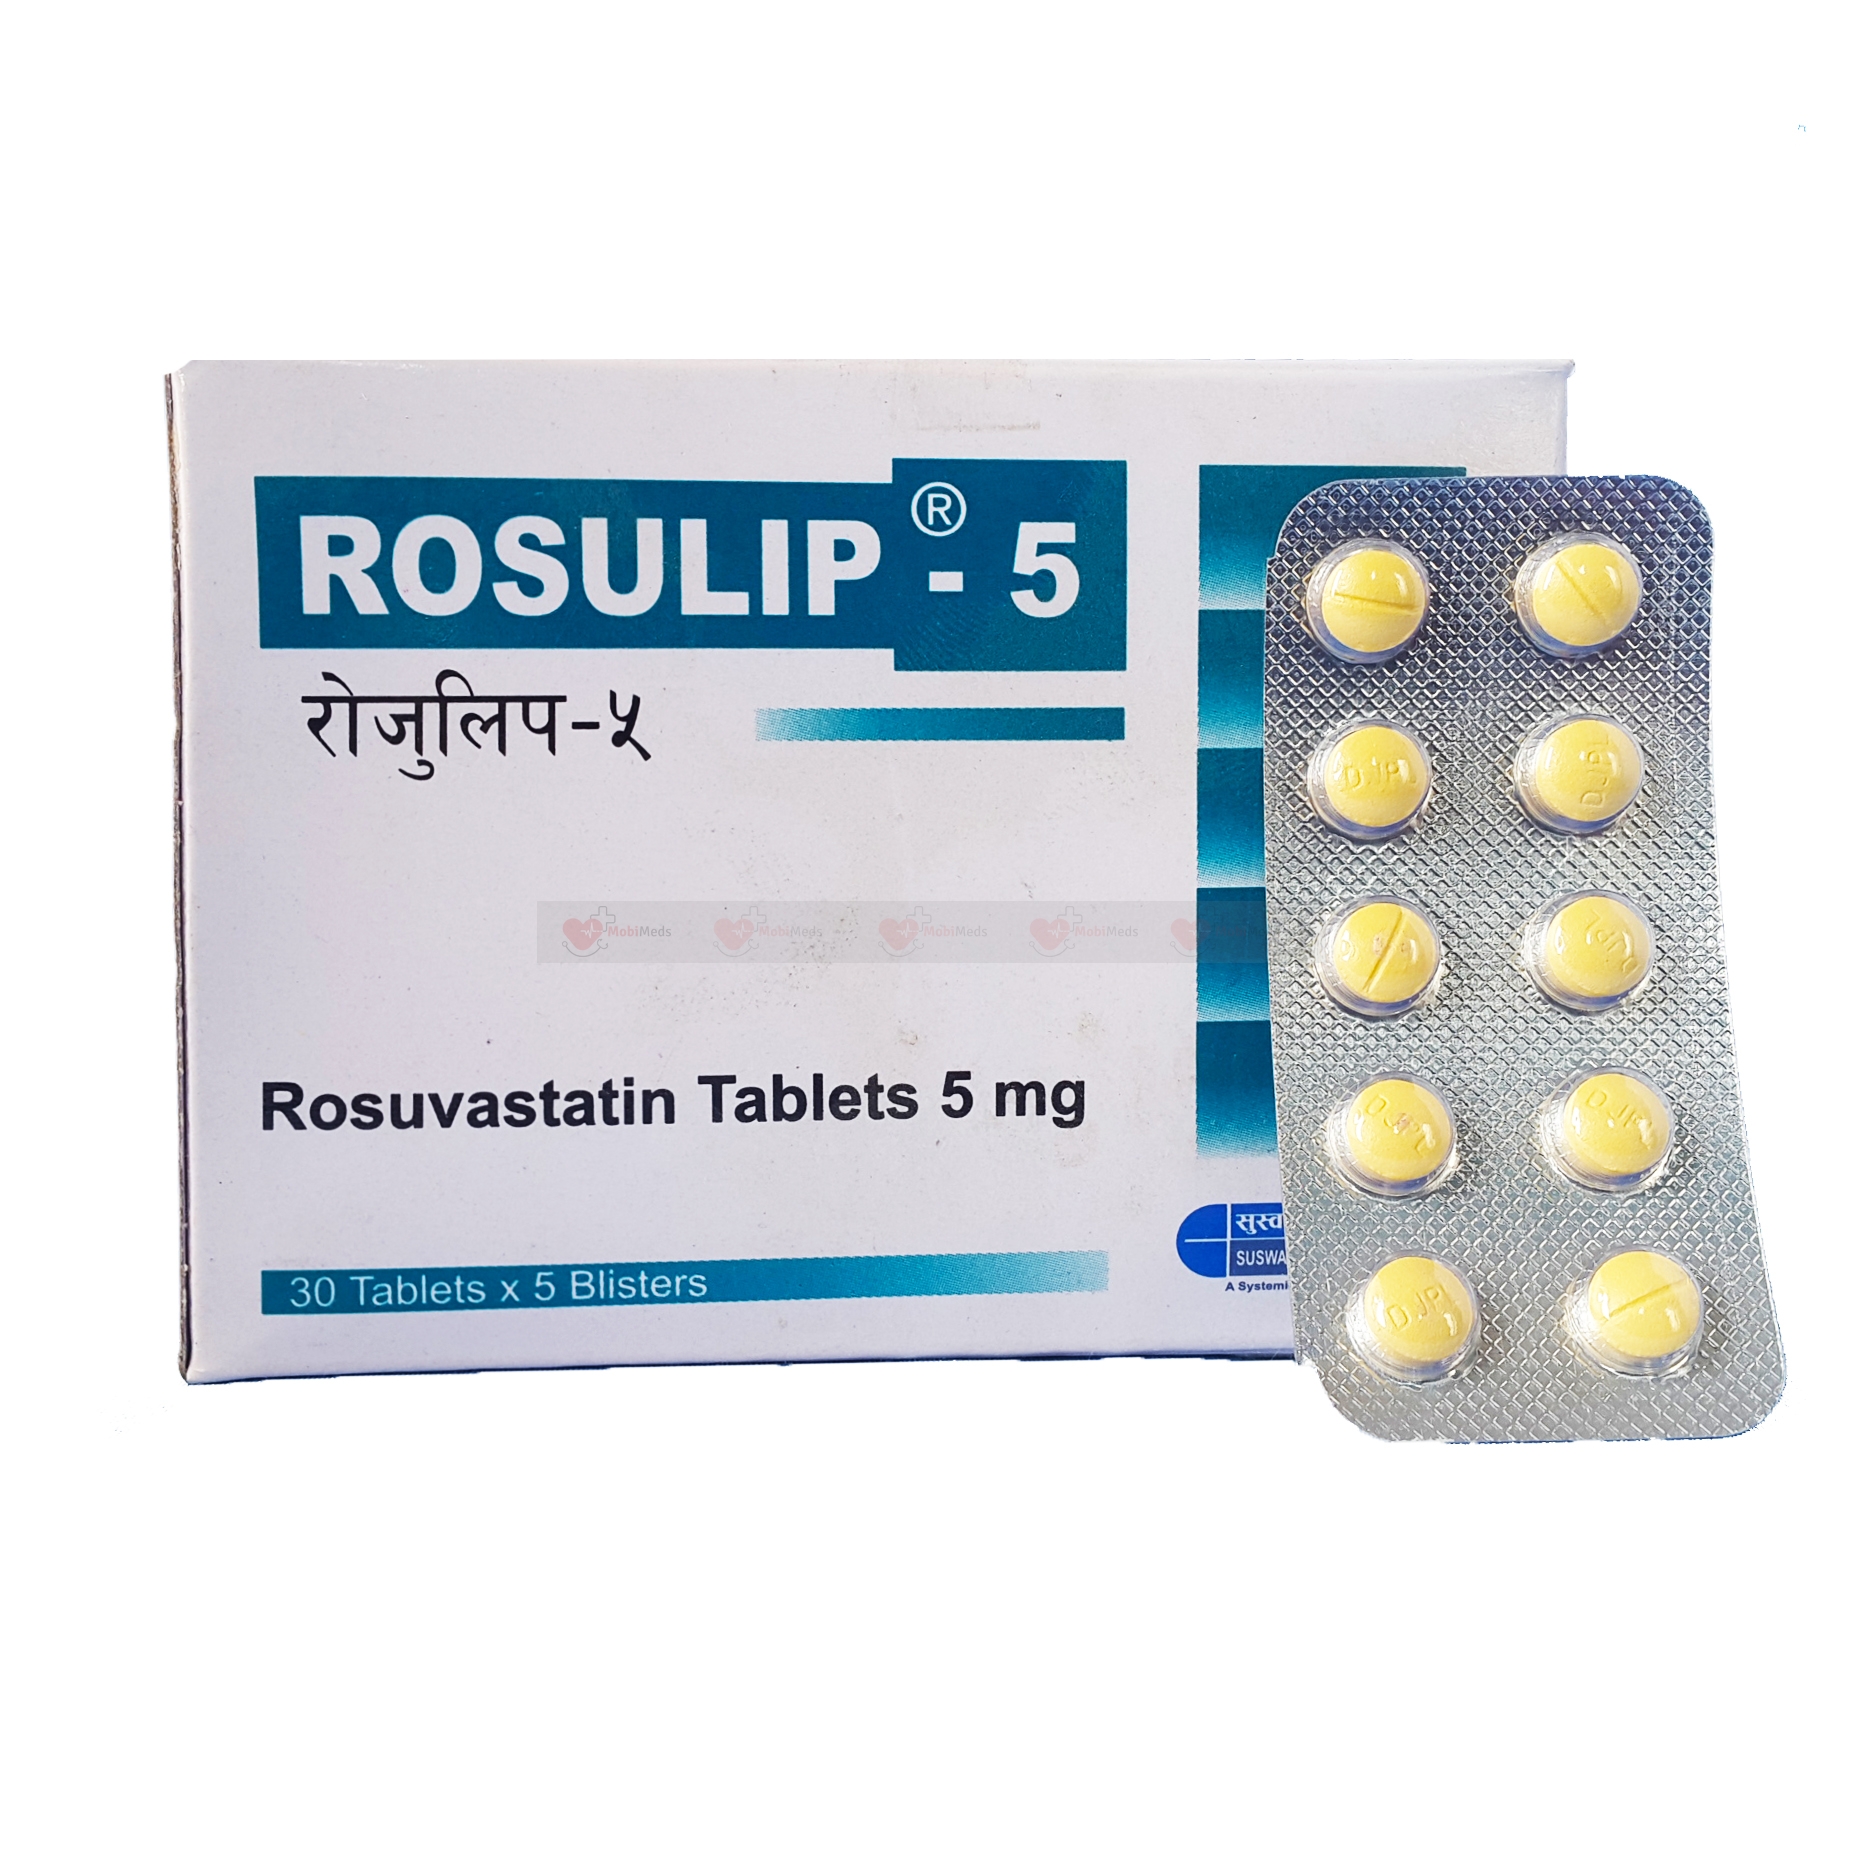 ROSULIP-5